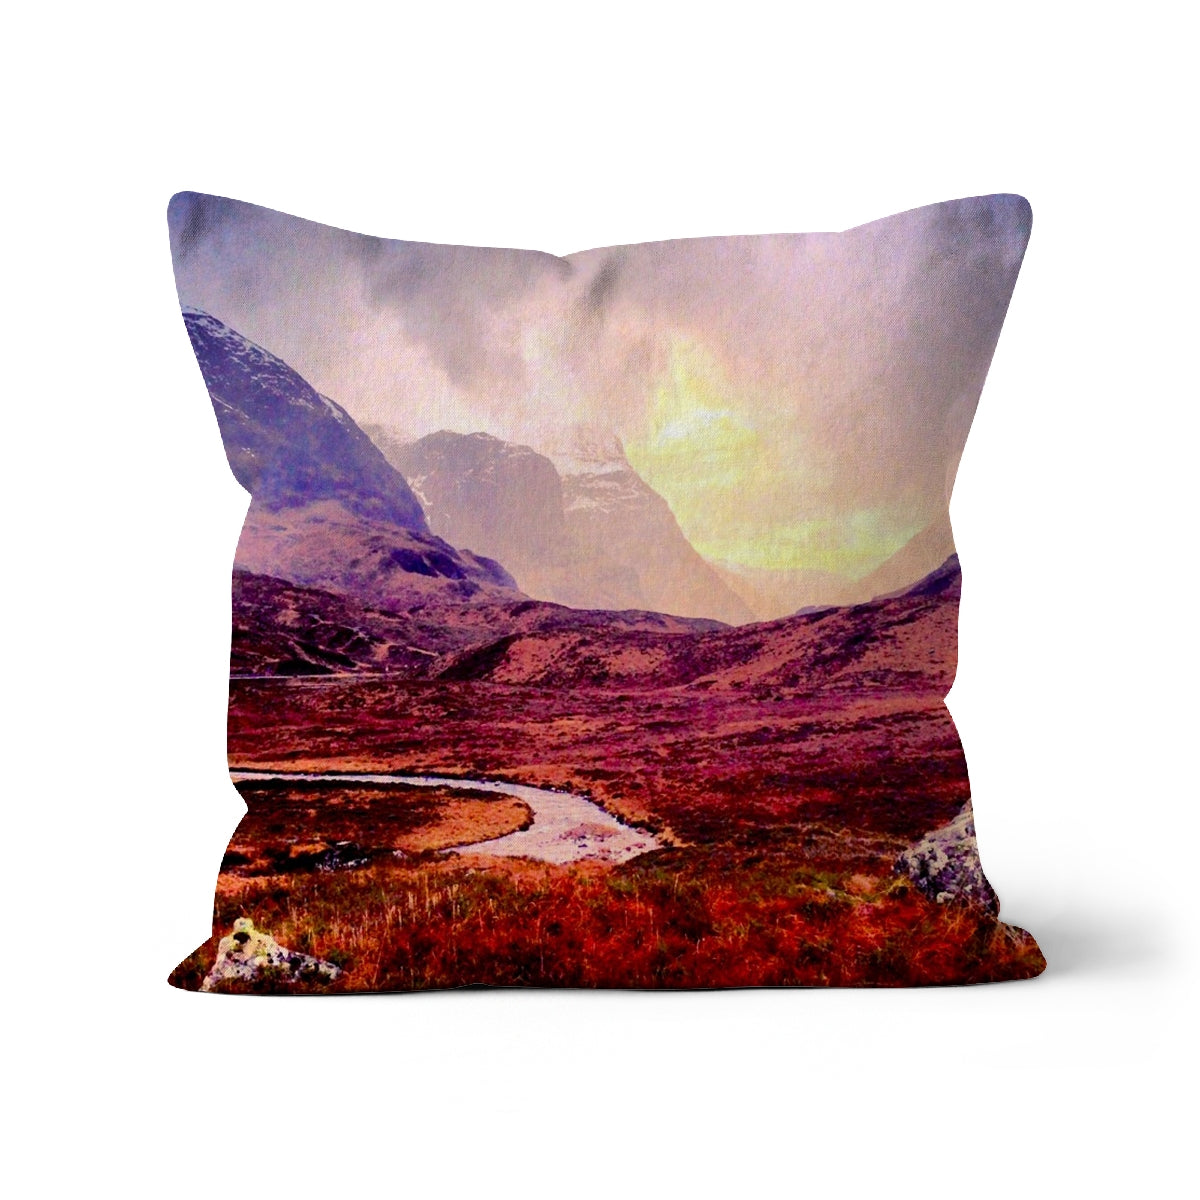 A Brooding Glencoe Art Gifts Cushion-Cushions-Glencoe Art Gallery-Linen-16"x16"-Paintings, Prints, Homeware, Art Gifts From Scotland By Scottish Artist Kevin Hunter